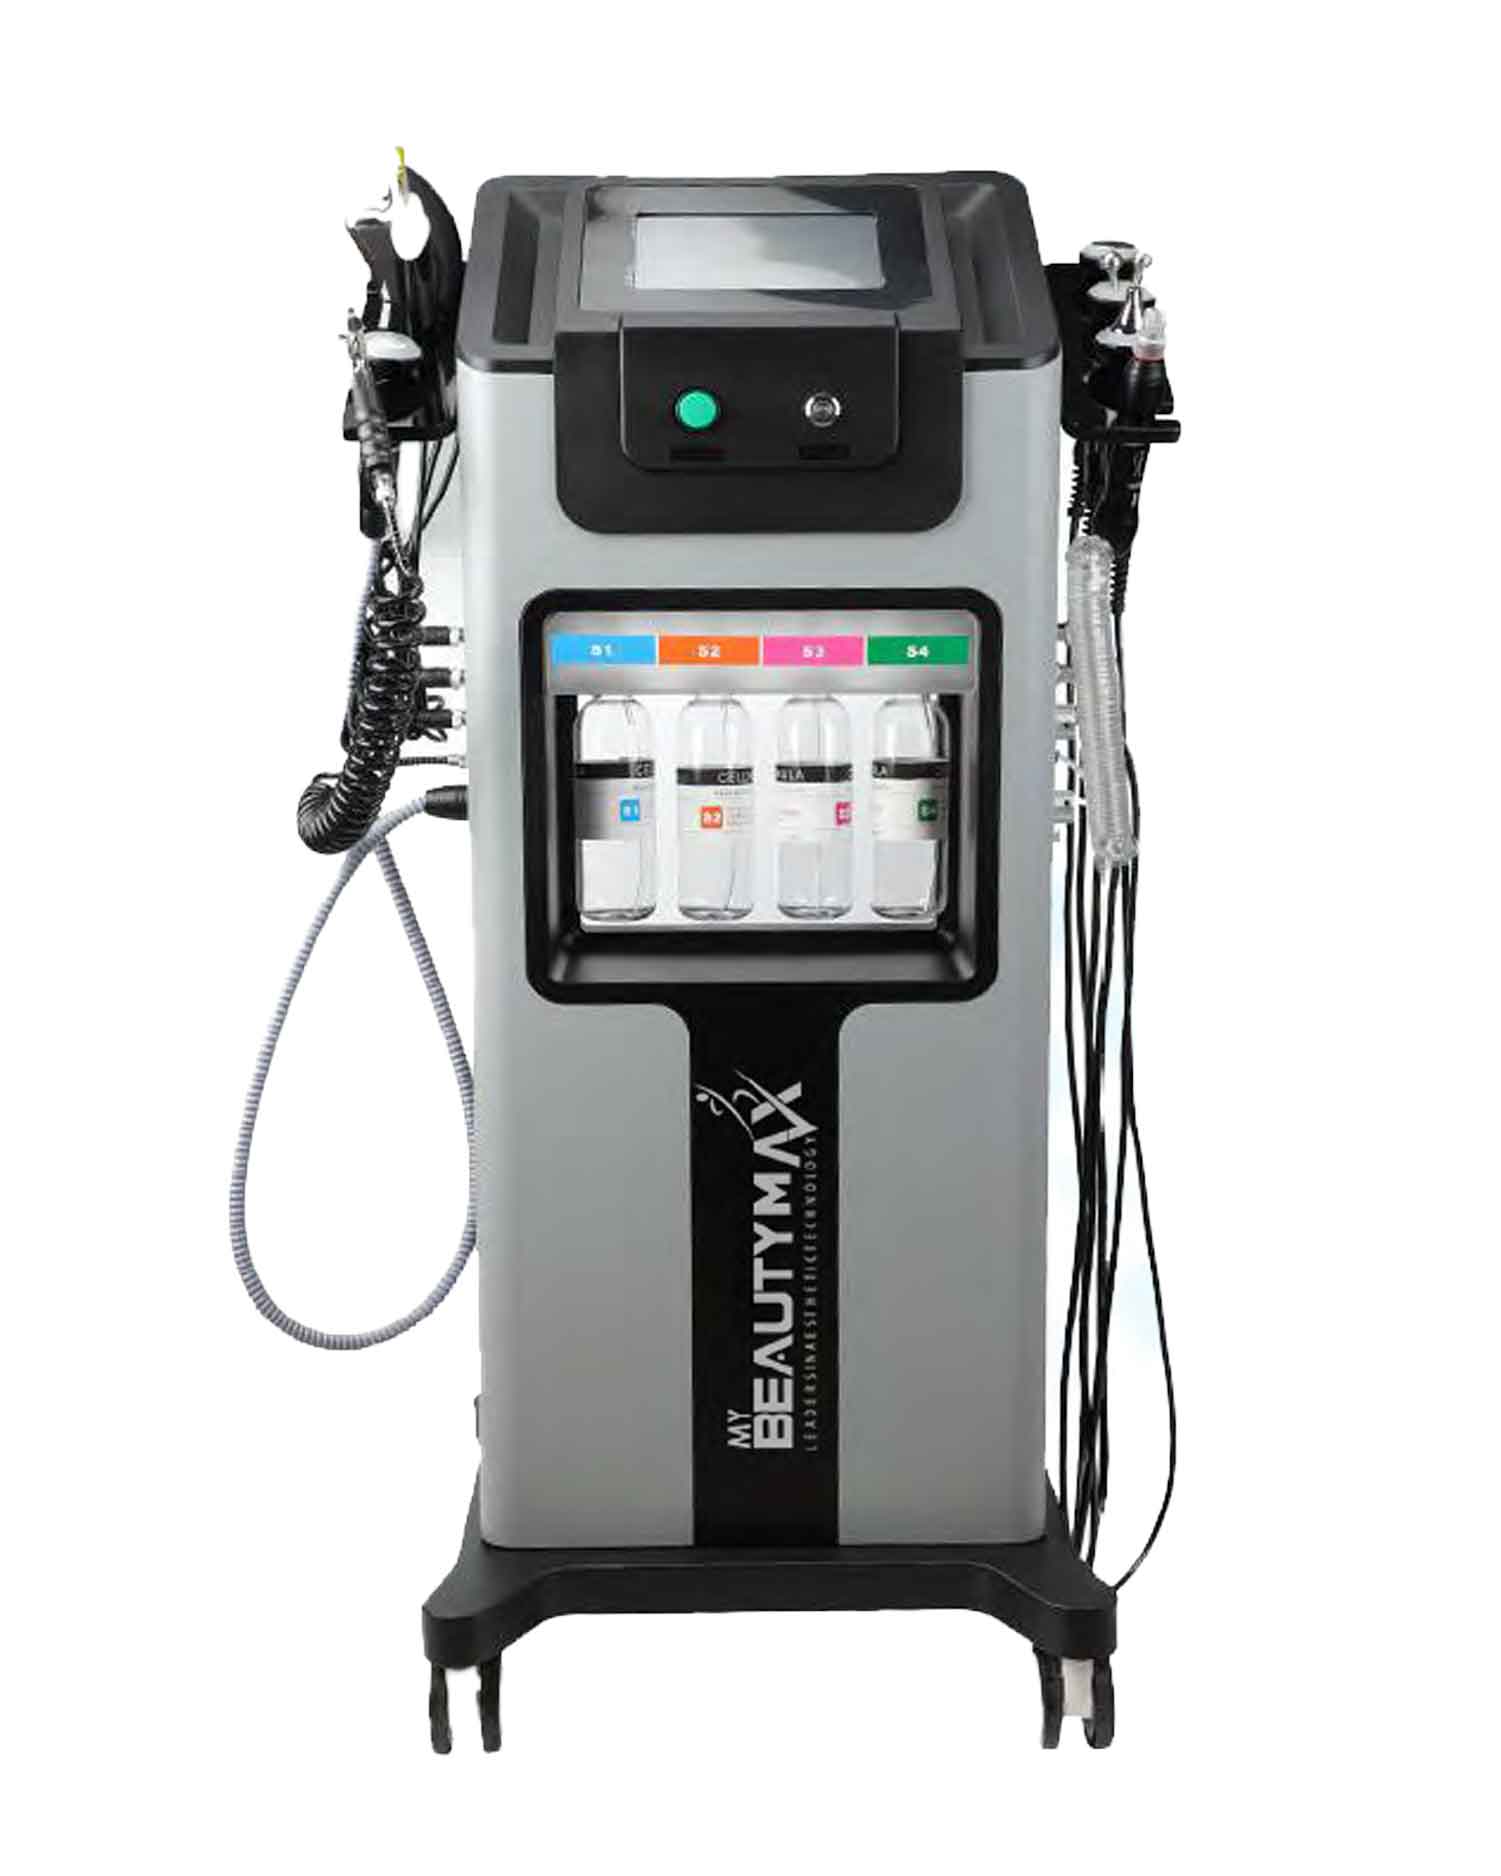 Damaskin Spa Plus 2023: Ultrasound, RF and Water Oxygen Face Skin Care Machine